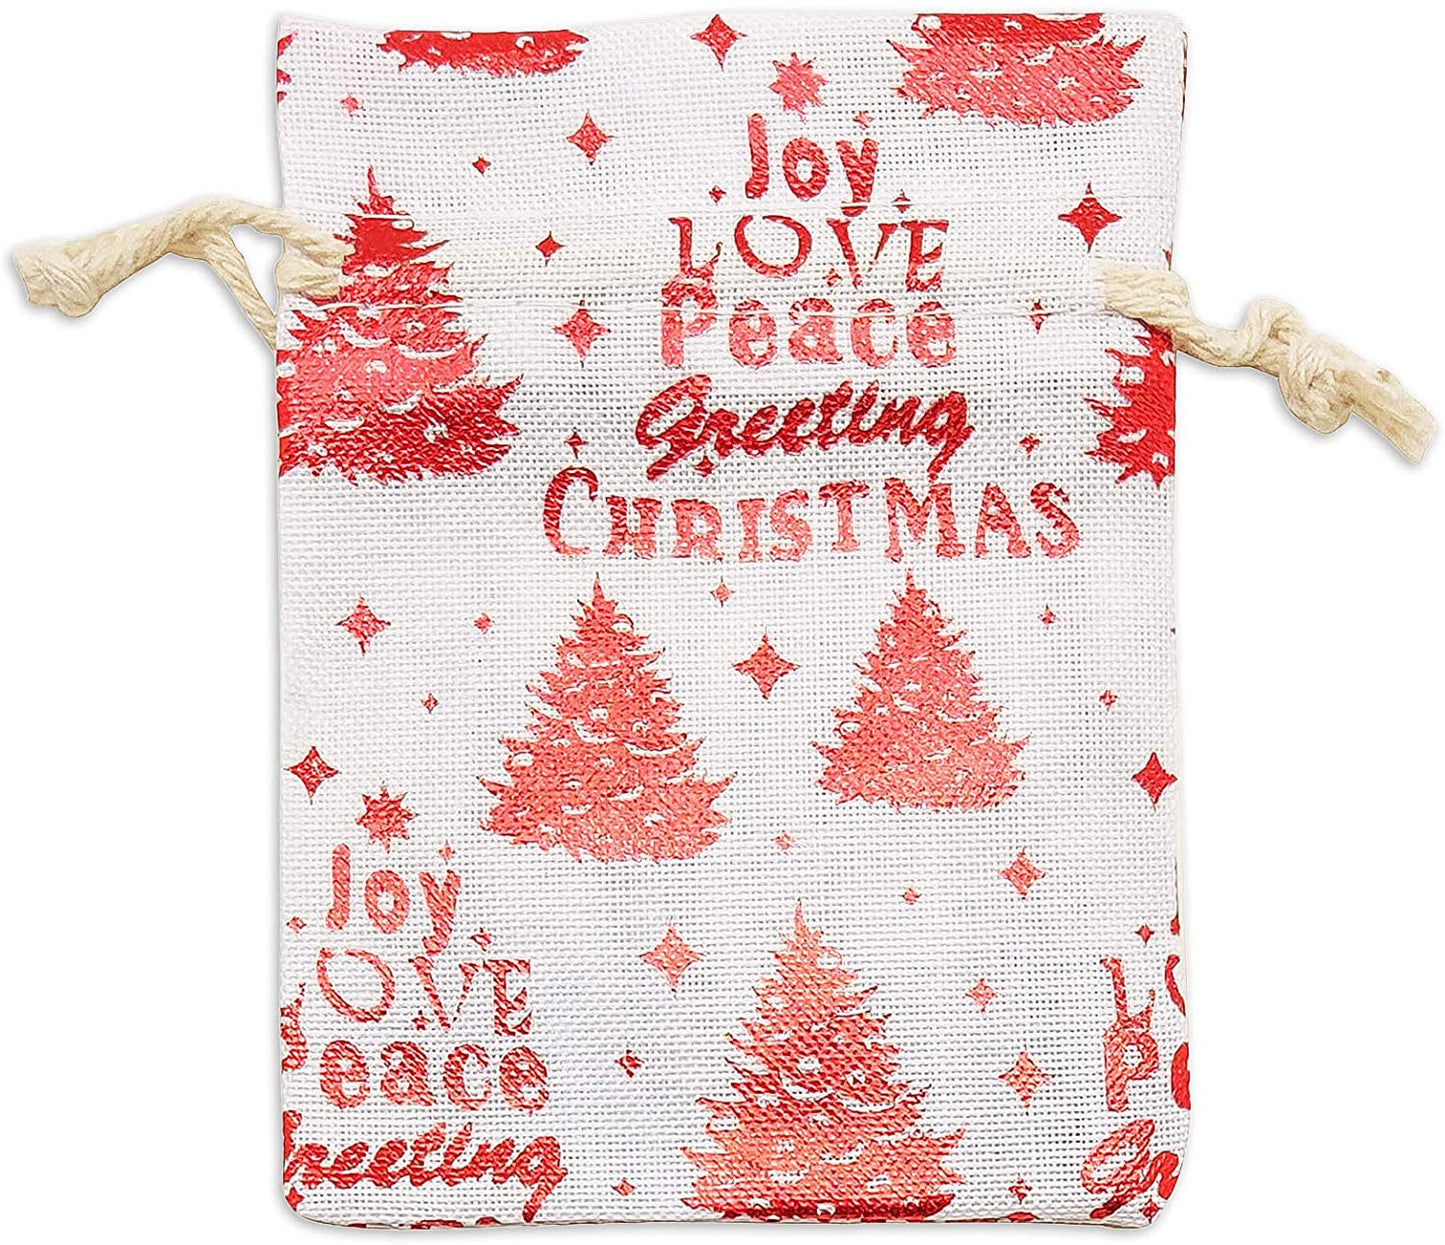 3" x 4" Cotton Muslin Red Christmas Tree Drawstring Gift Bags